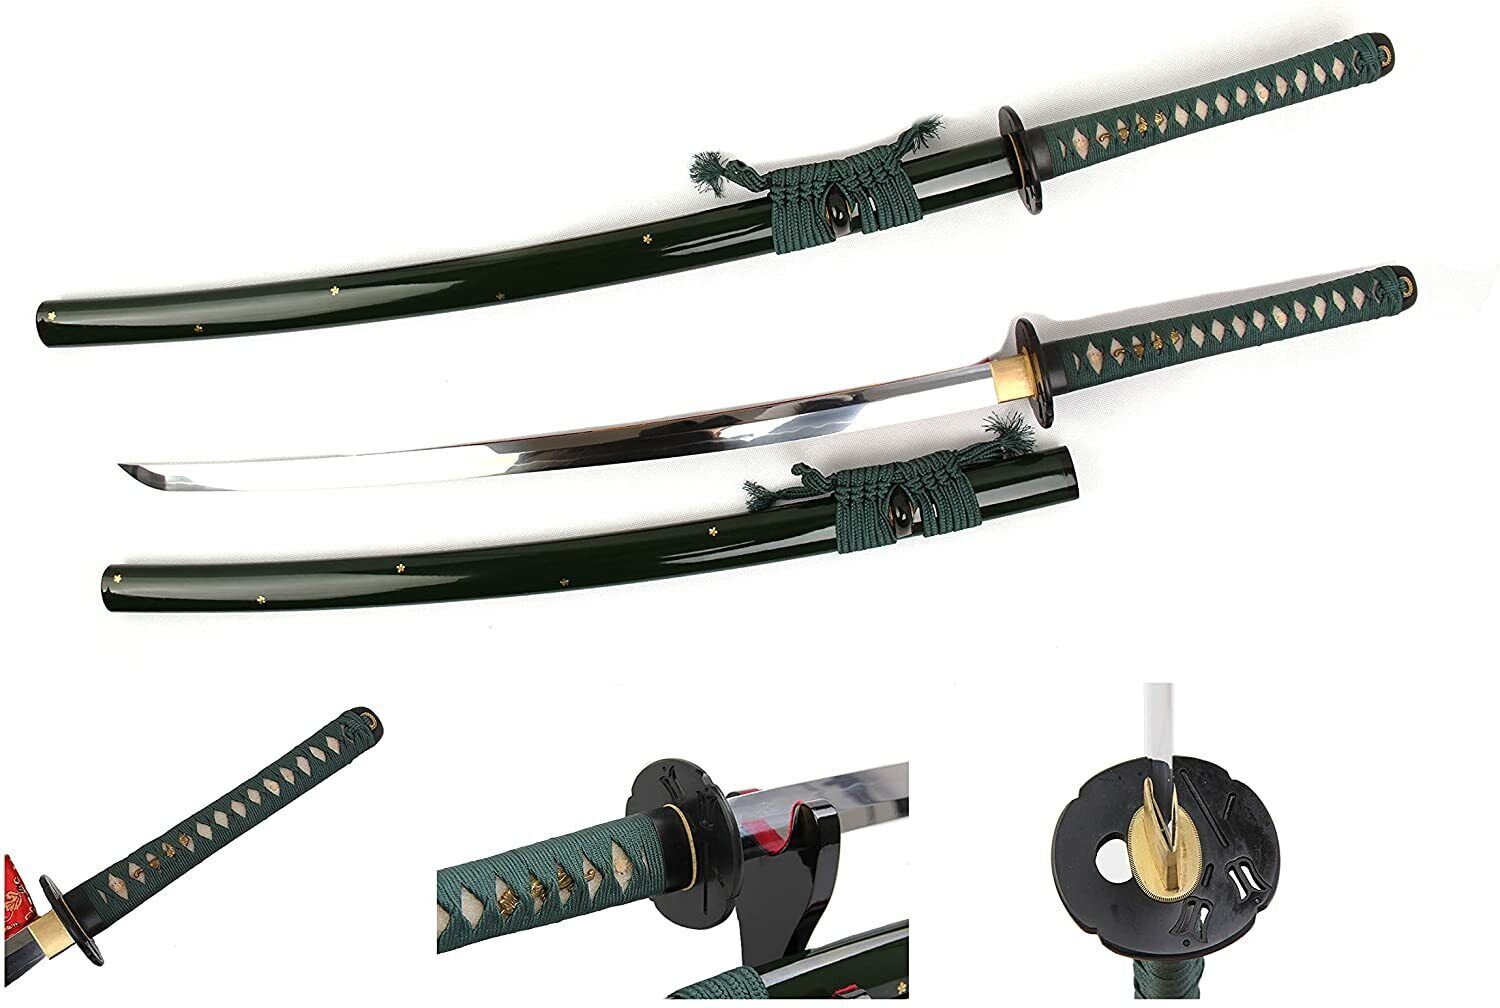 Snake Eye Tactical Classic Handmade Katana Sword Samurai Sword Real Swords 